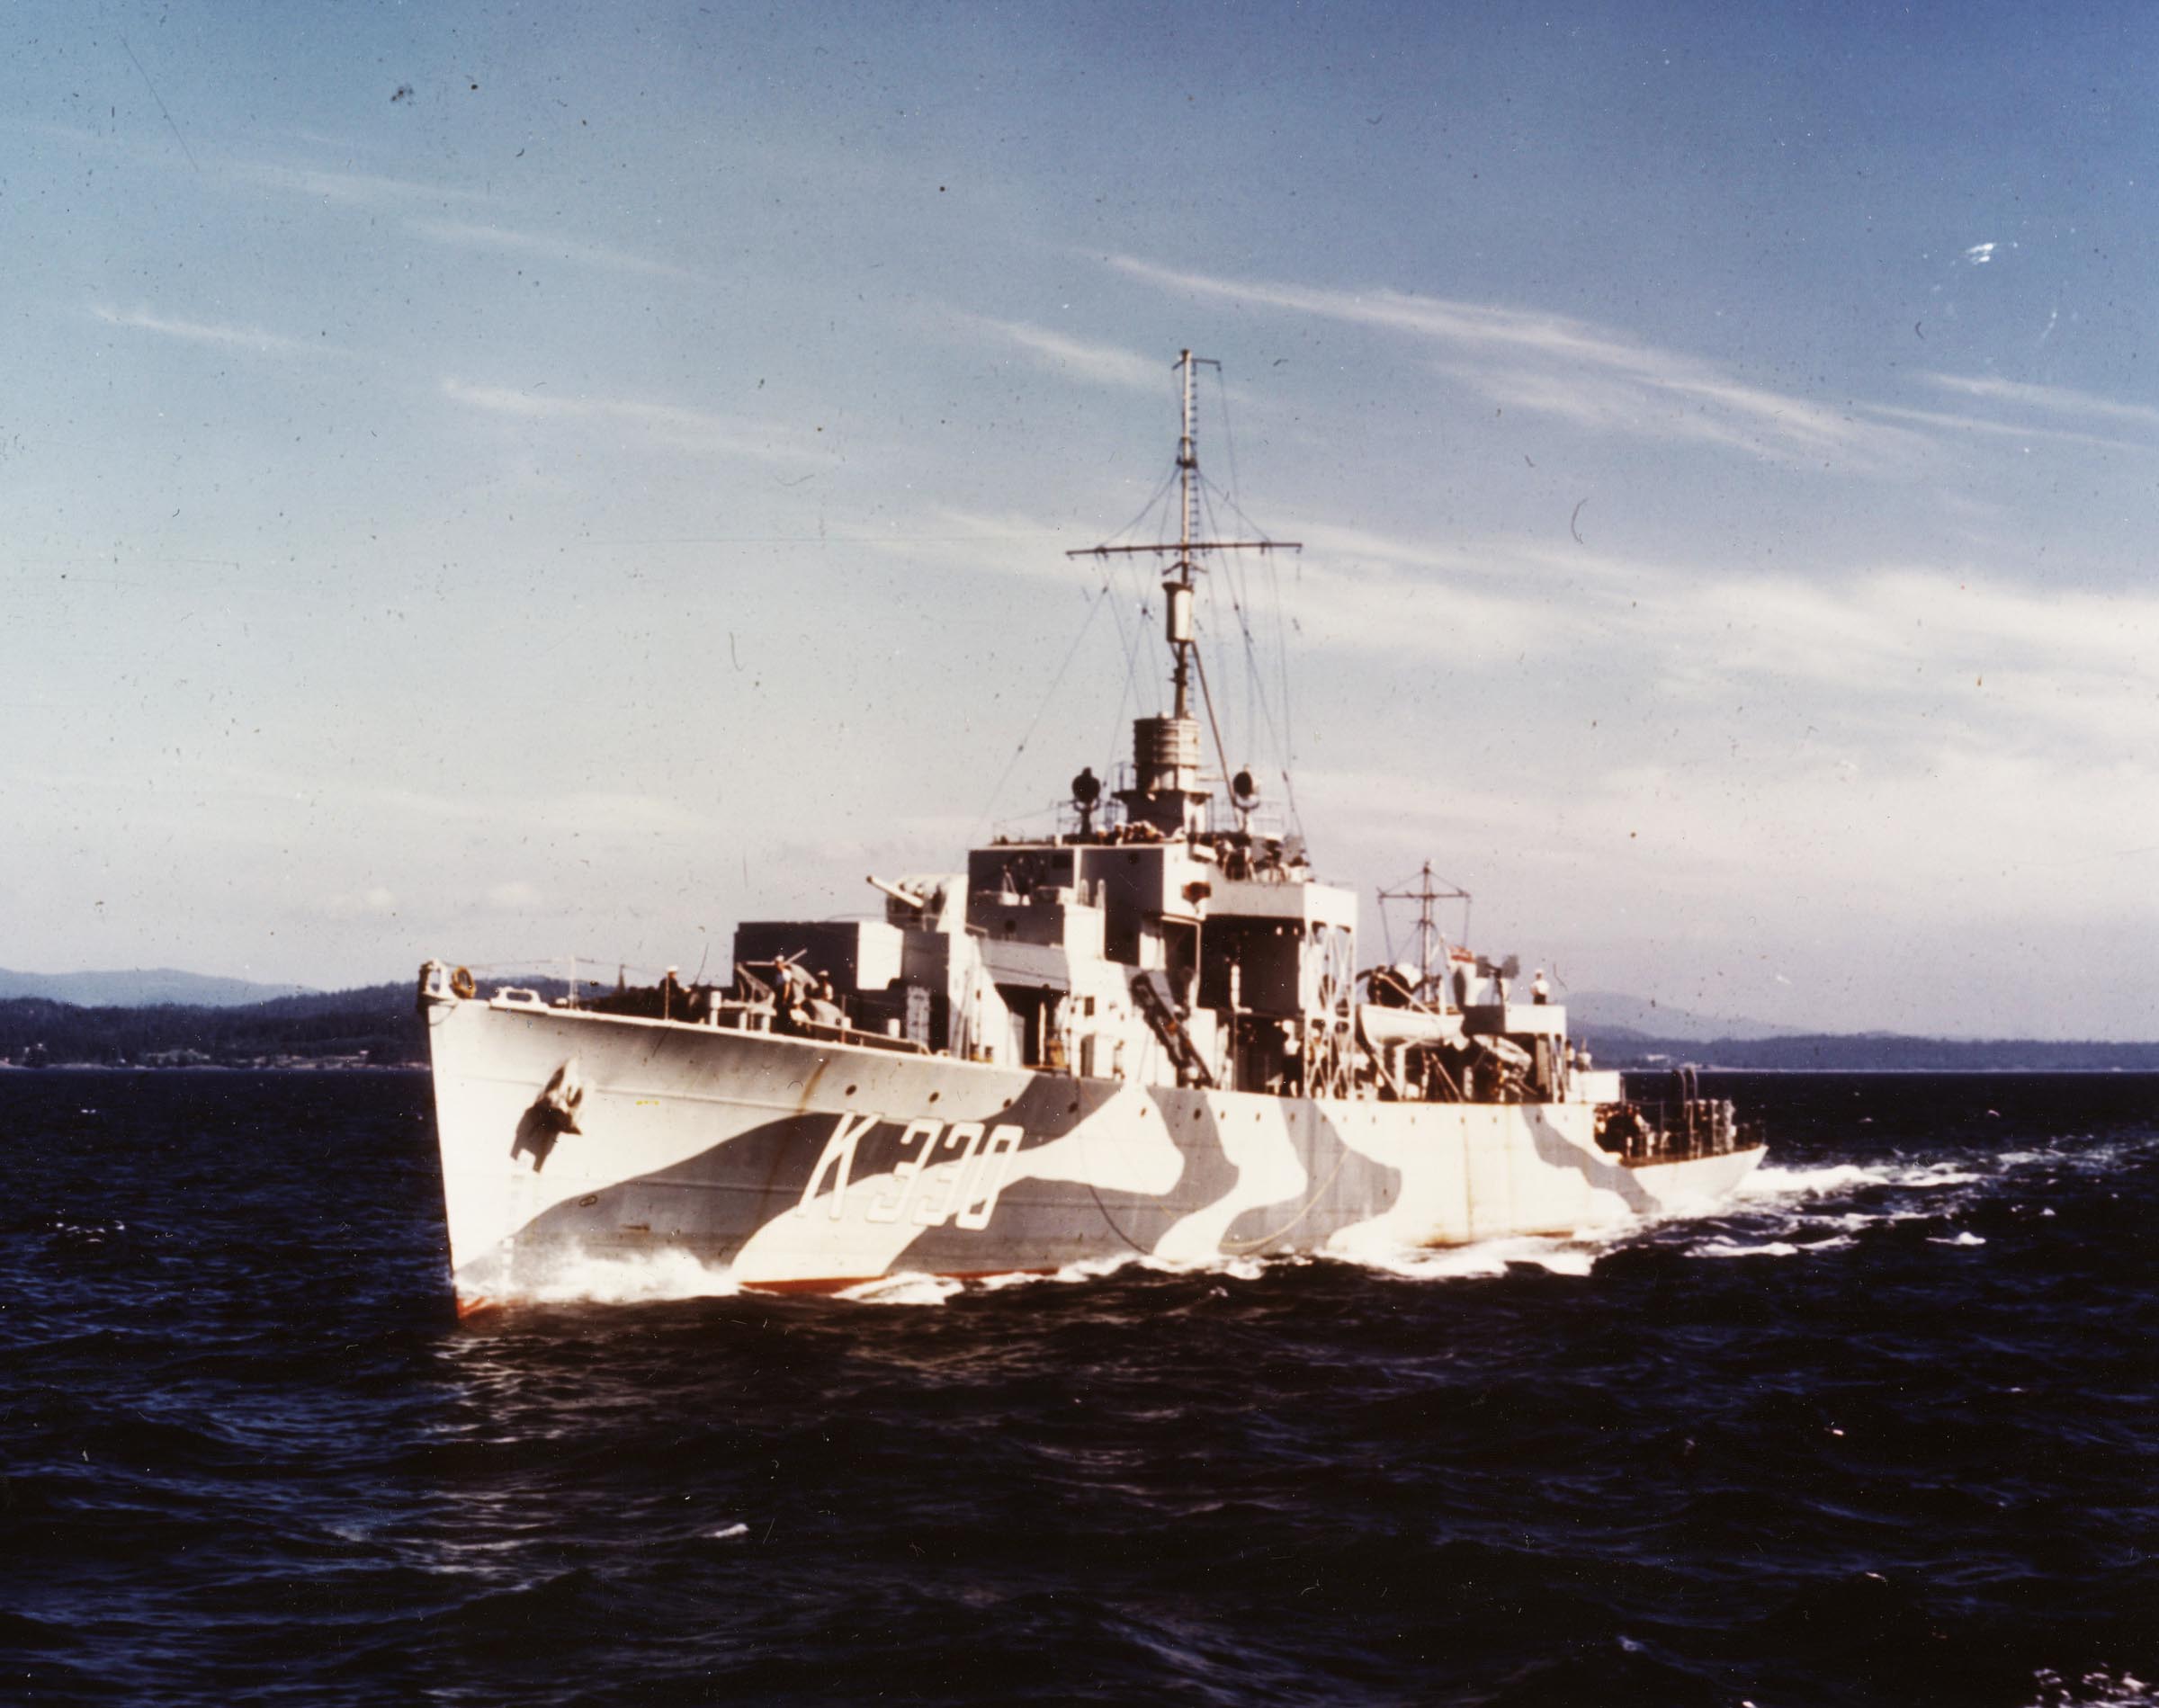 HMCS WASKESIU